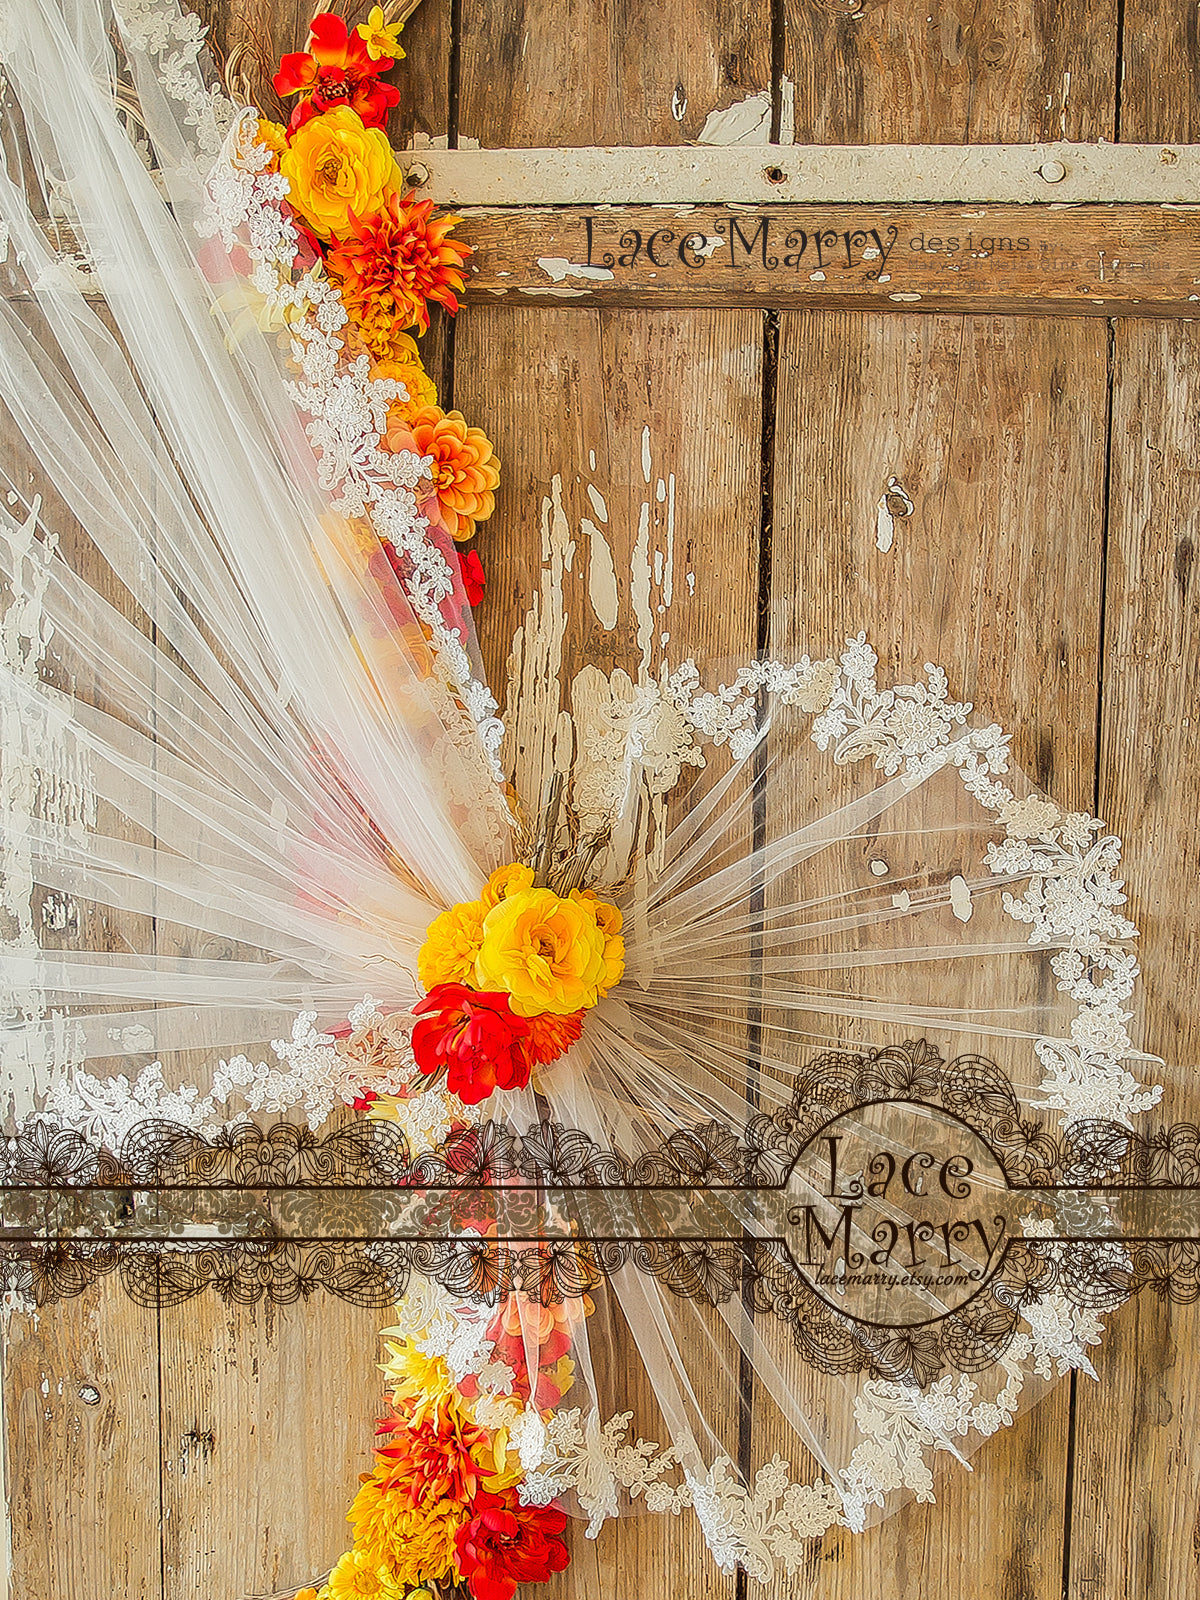 Drop Over Bridal Veil with Alencon Lace Flowers Edge